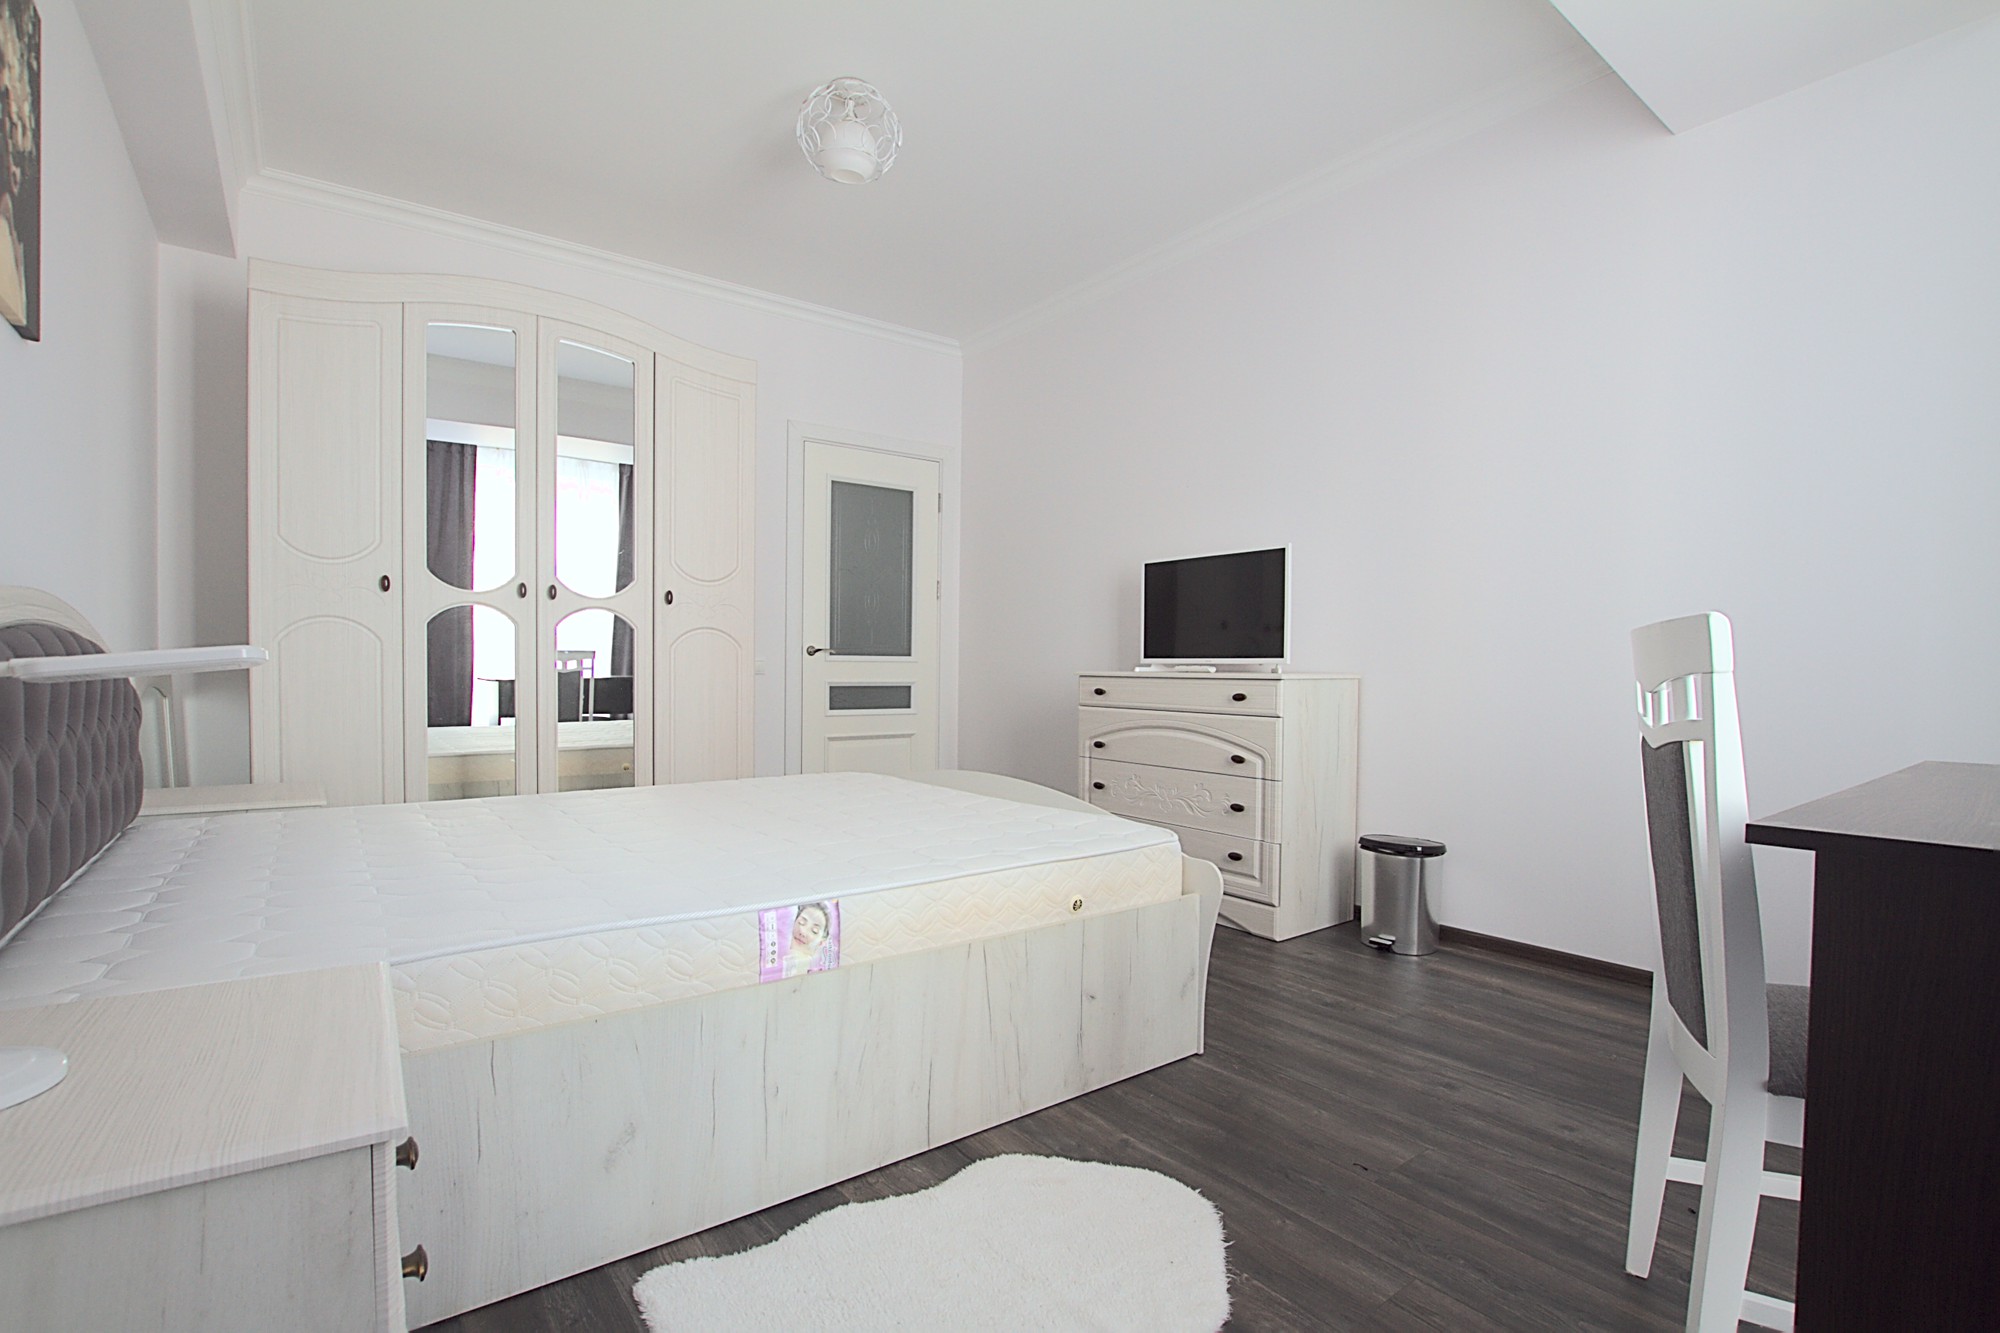 Melestiu Studio is a 1 room apartment for rent in Chisinau, Moldova